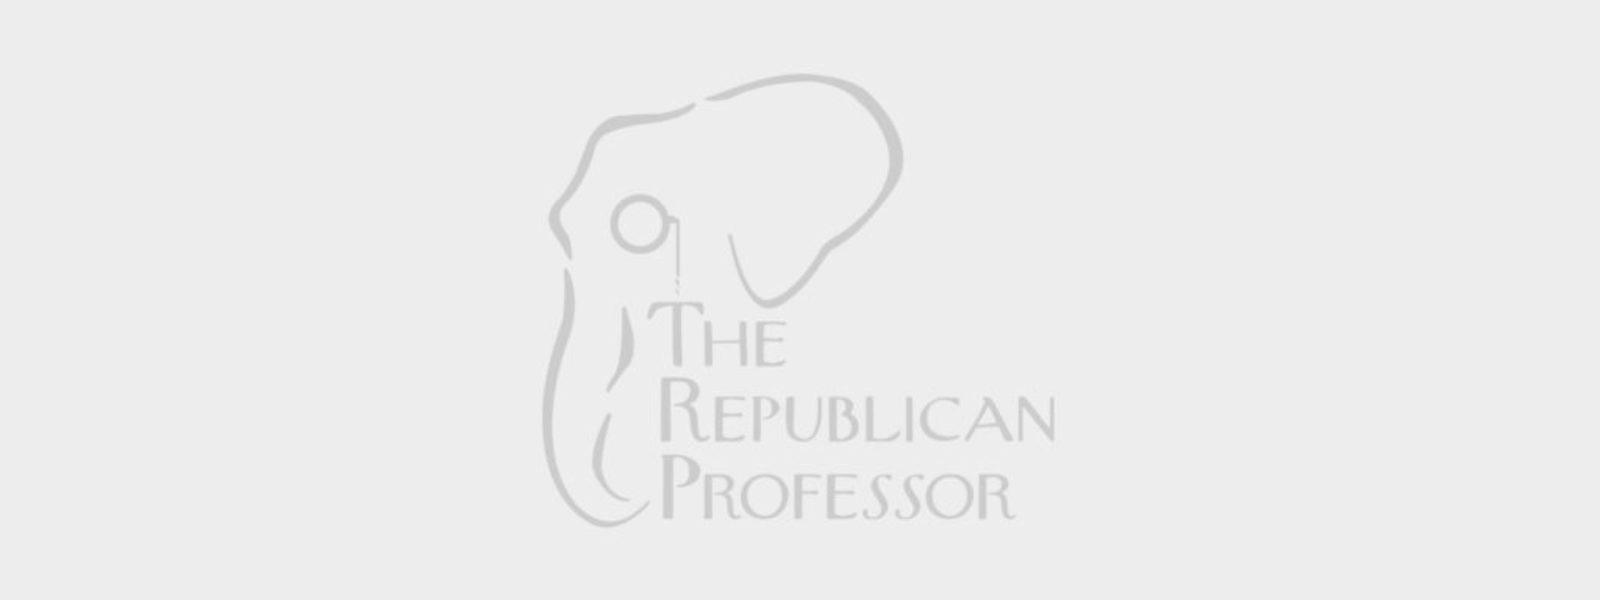 The Republican Professor